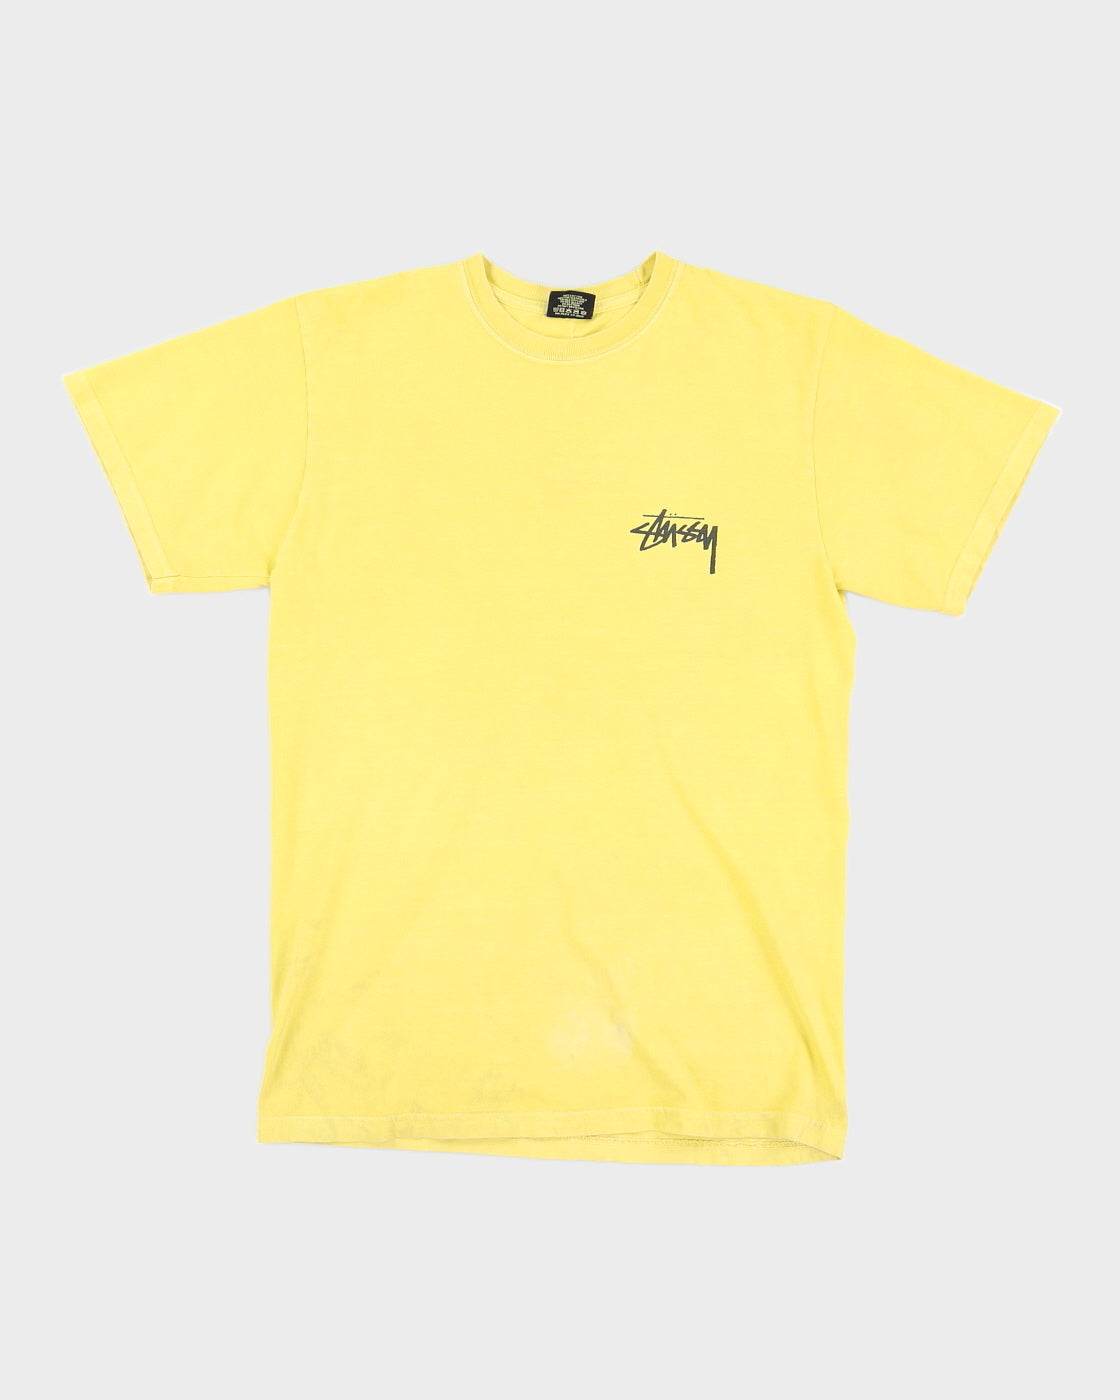 Stussy Yellow Logo T-Shirt - S